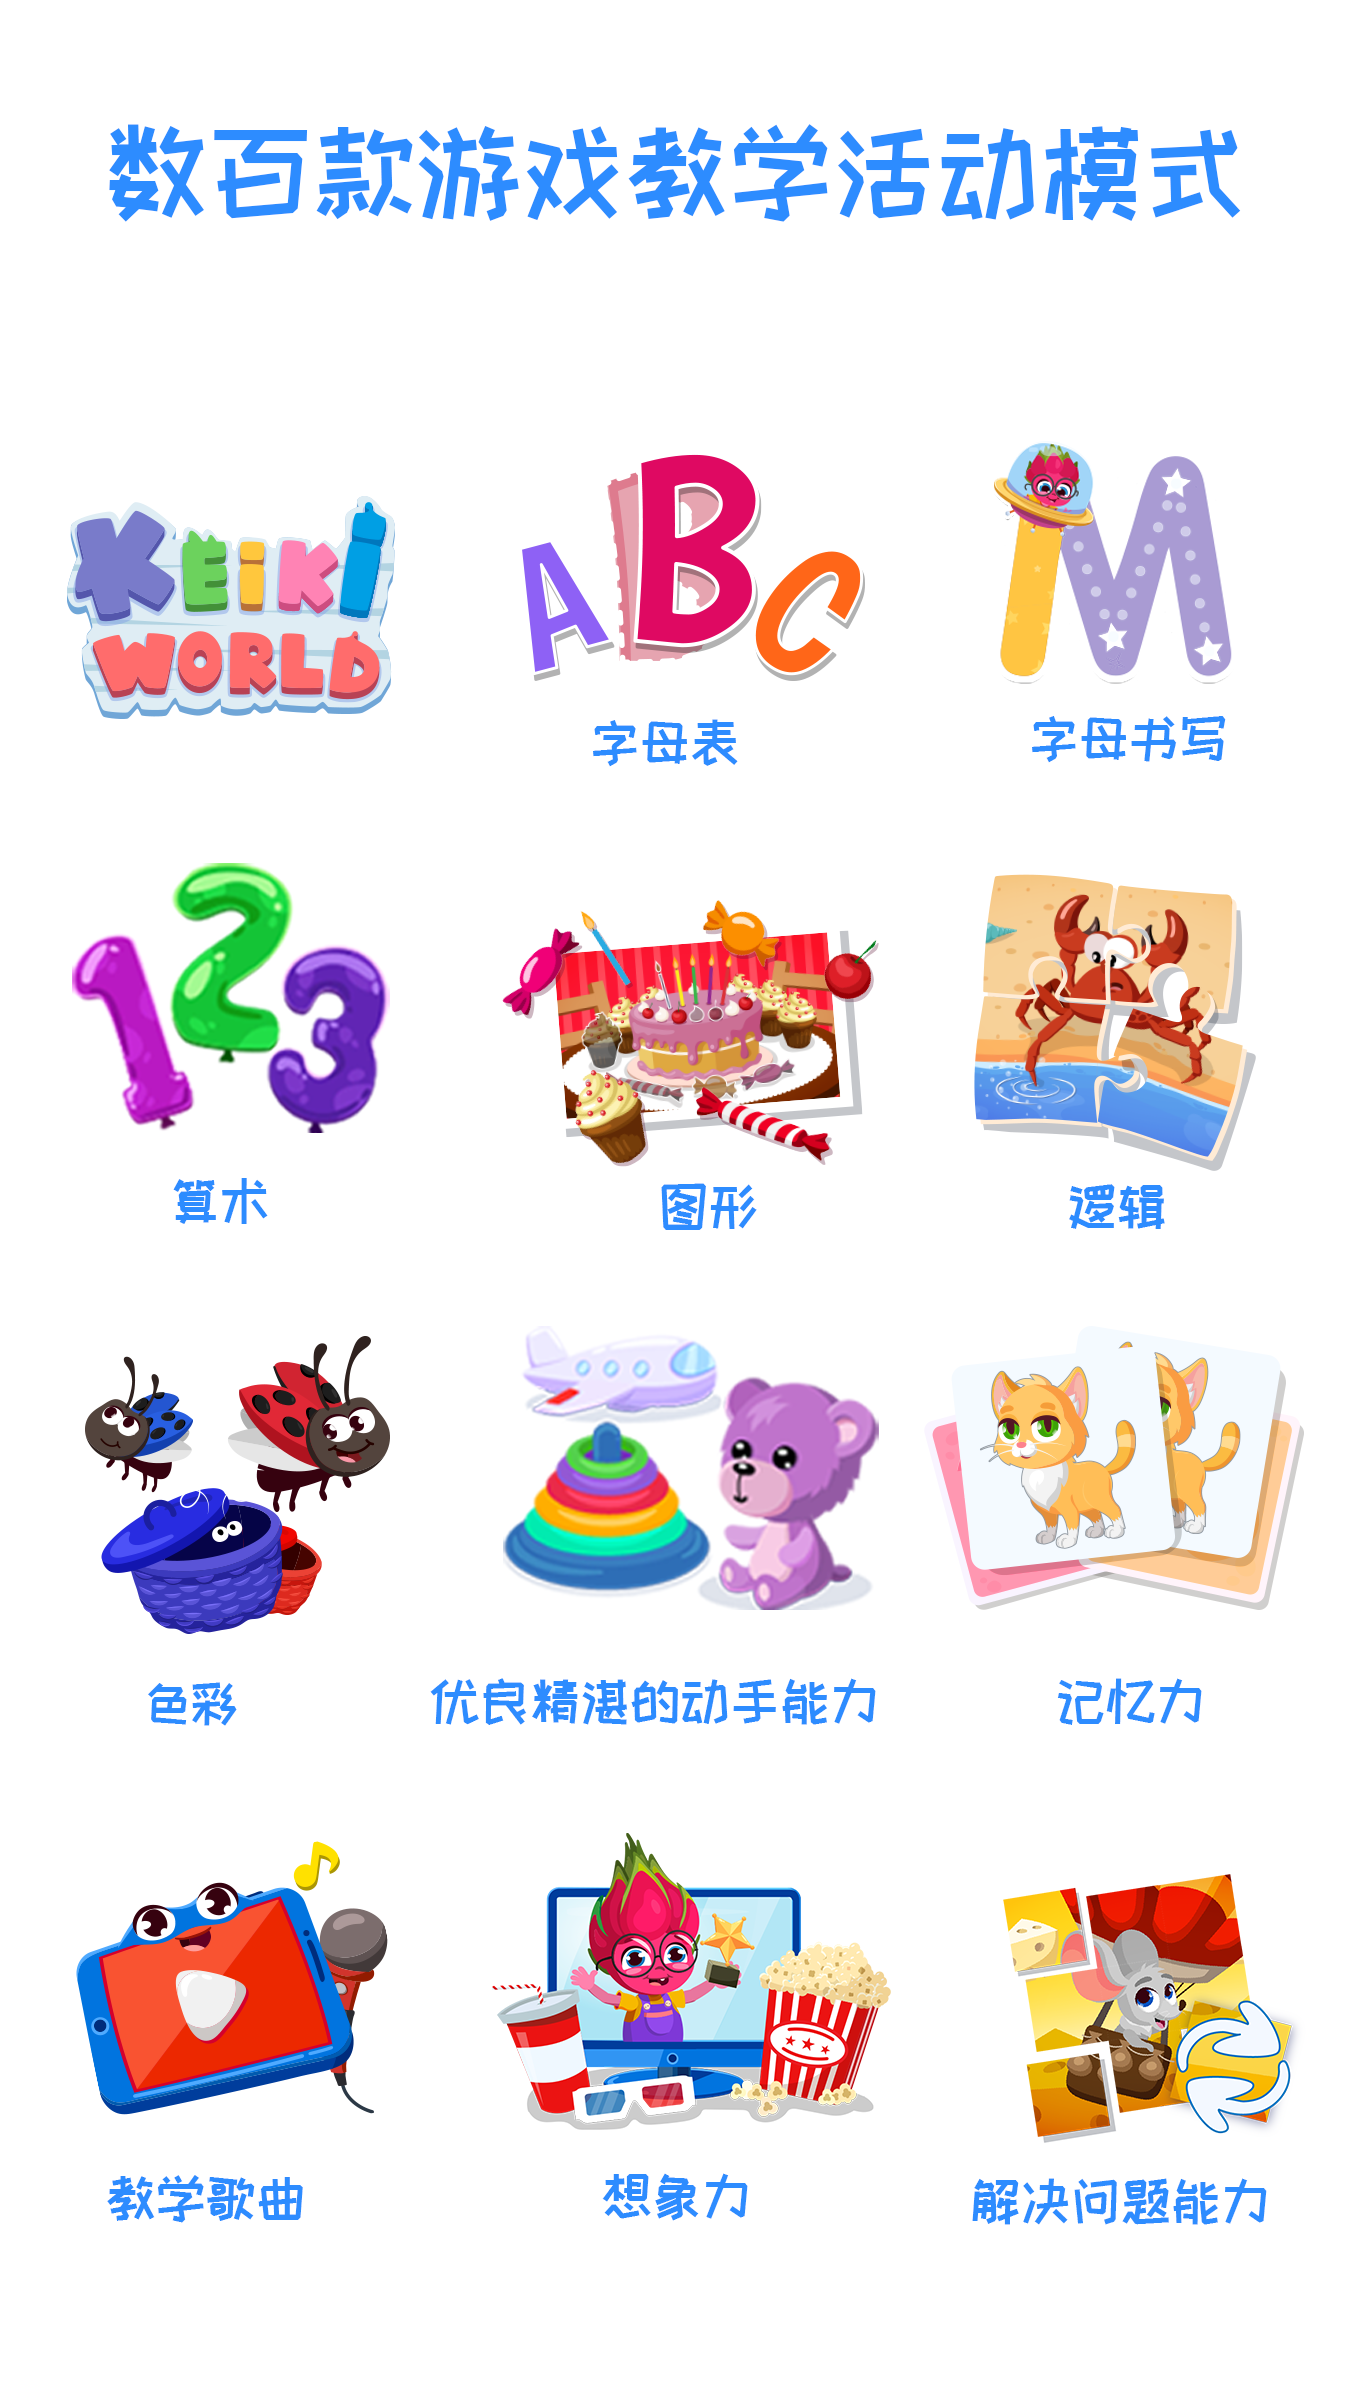 Screenshot 1 of Keiki 世界：abc kids 儿童教育游戏大全 6.13.1